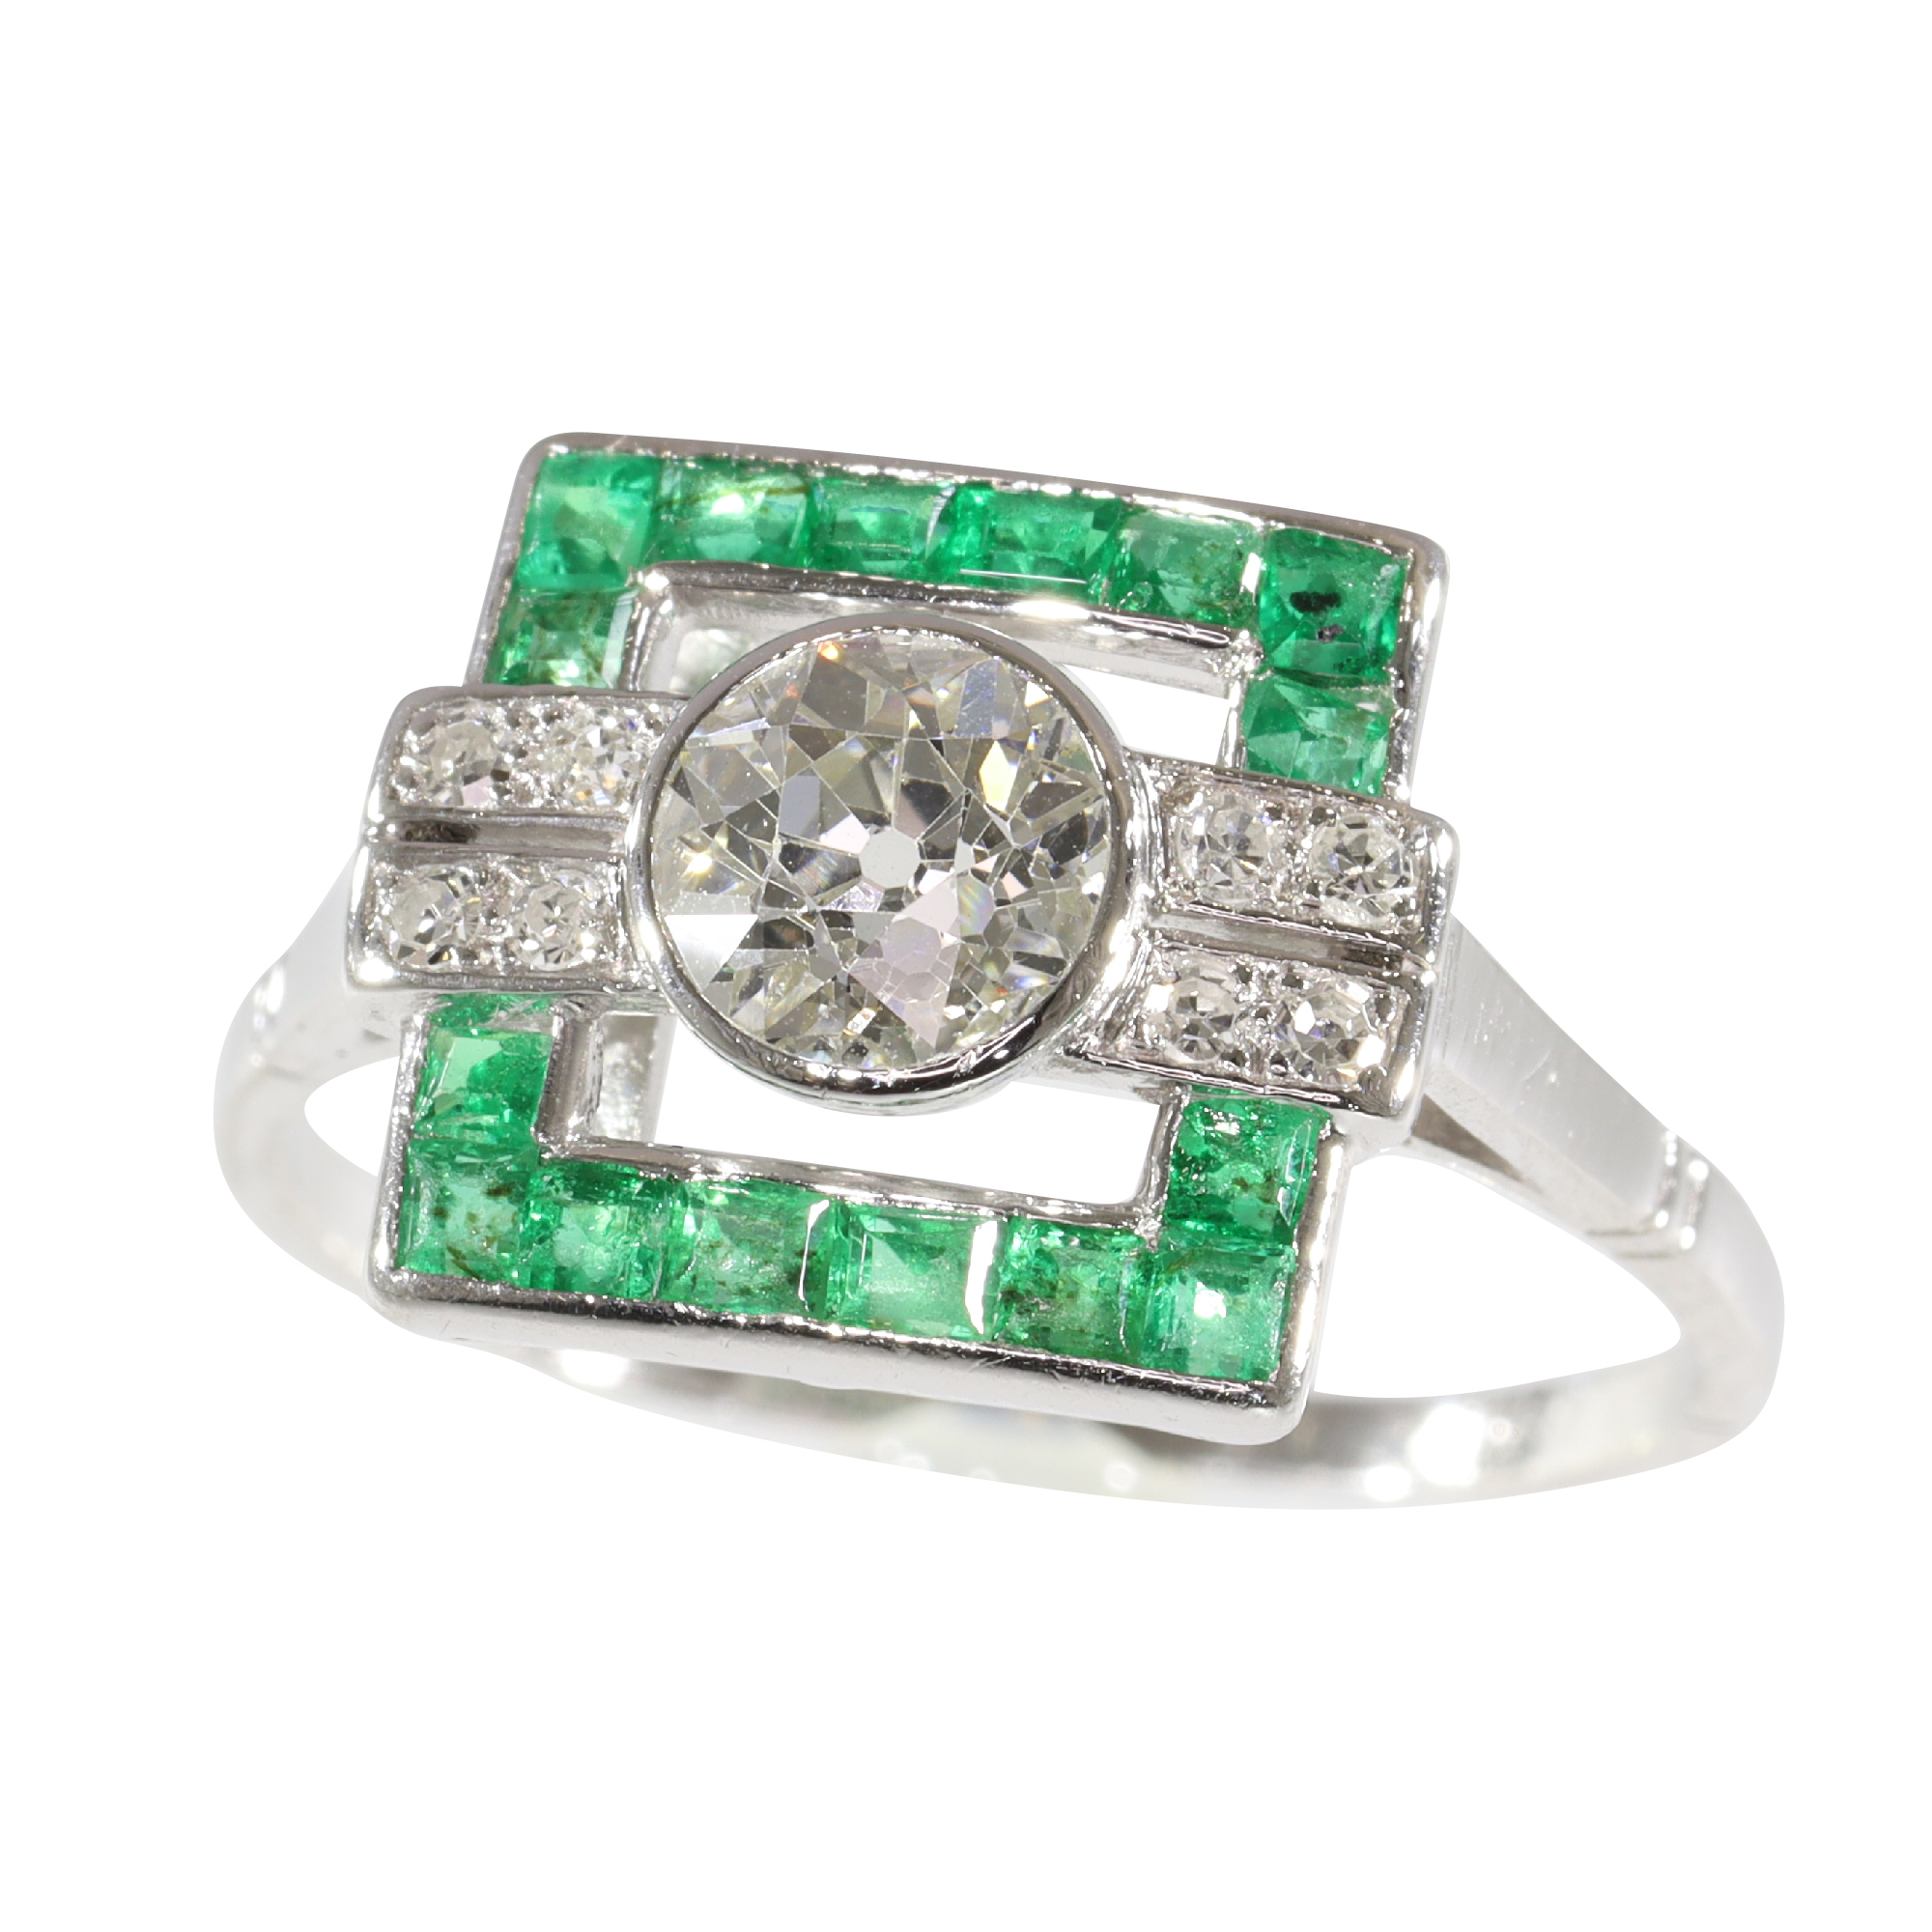 1920's Love Affair: Art Deco Engagement Ring